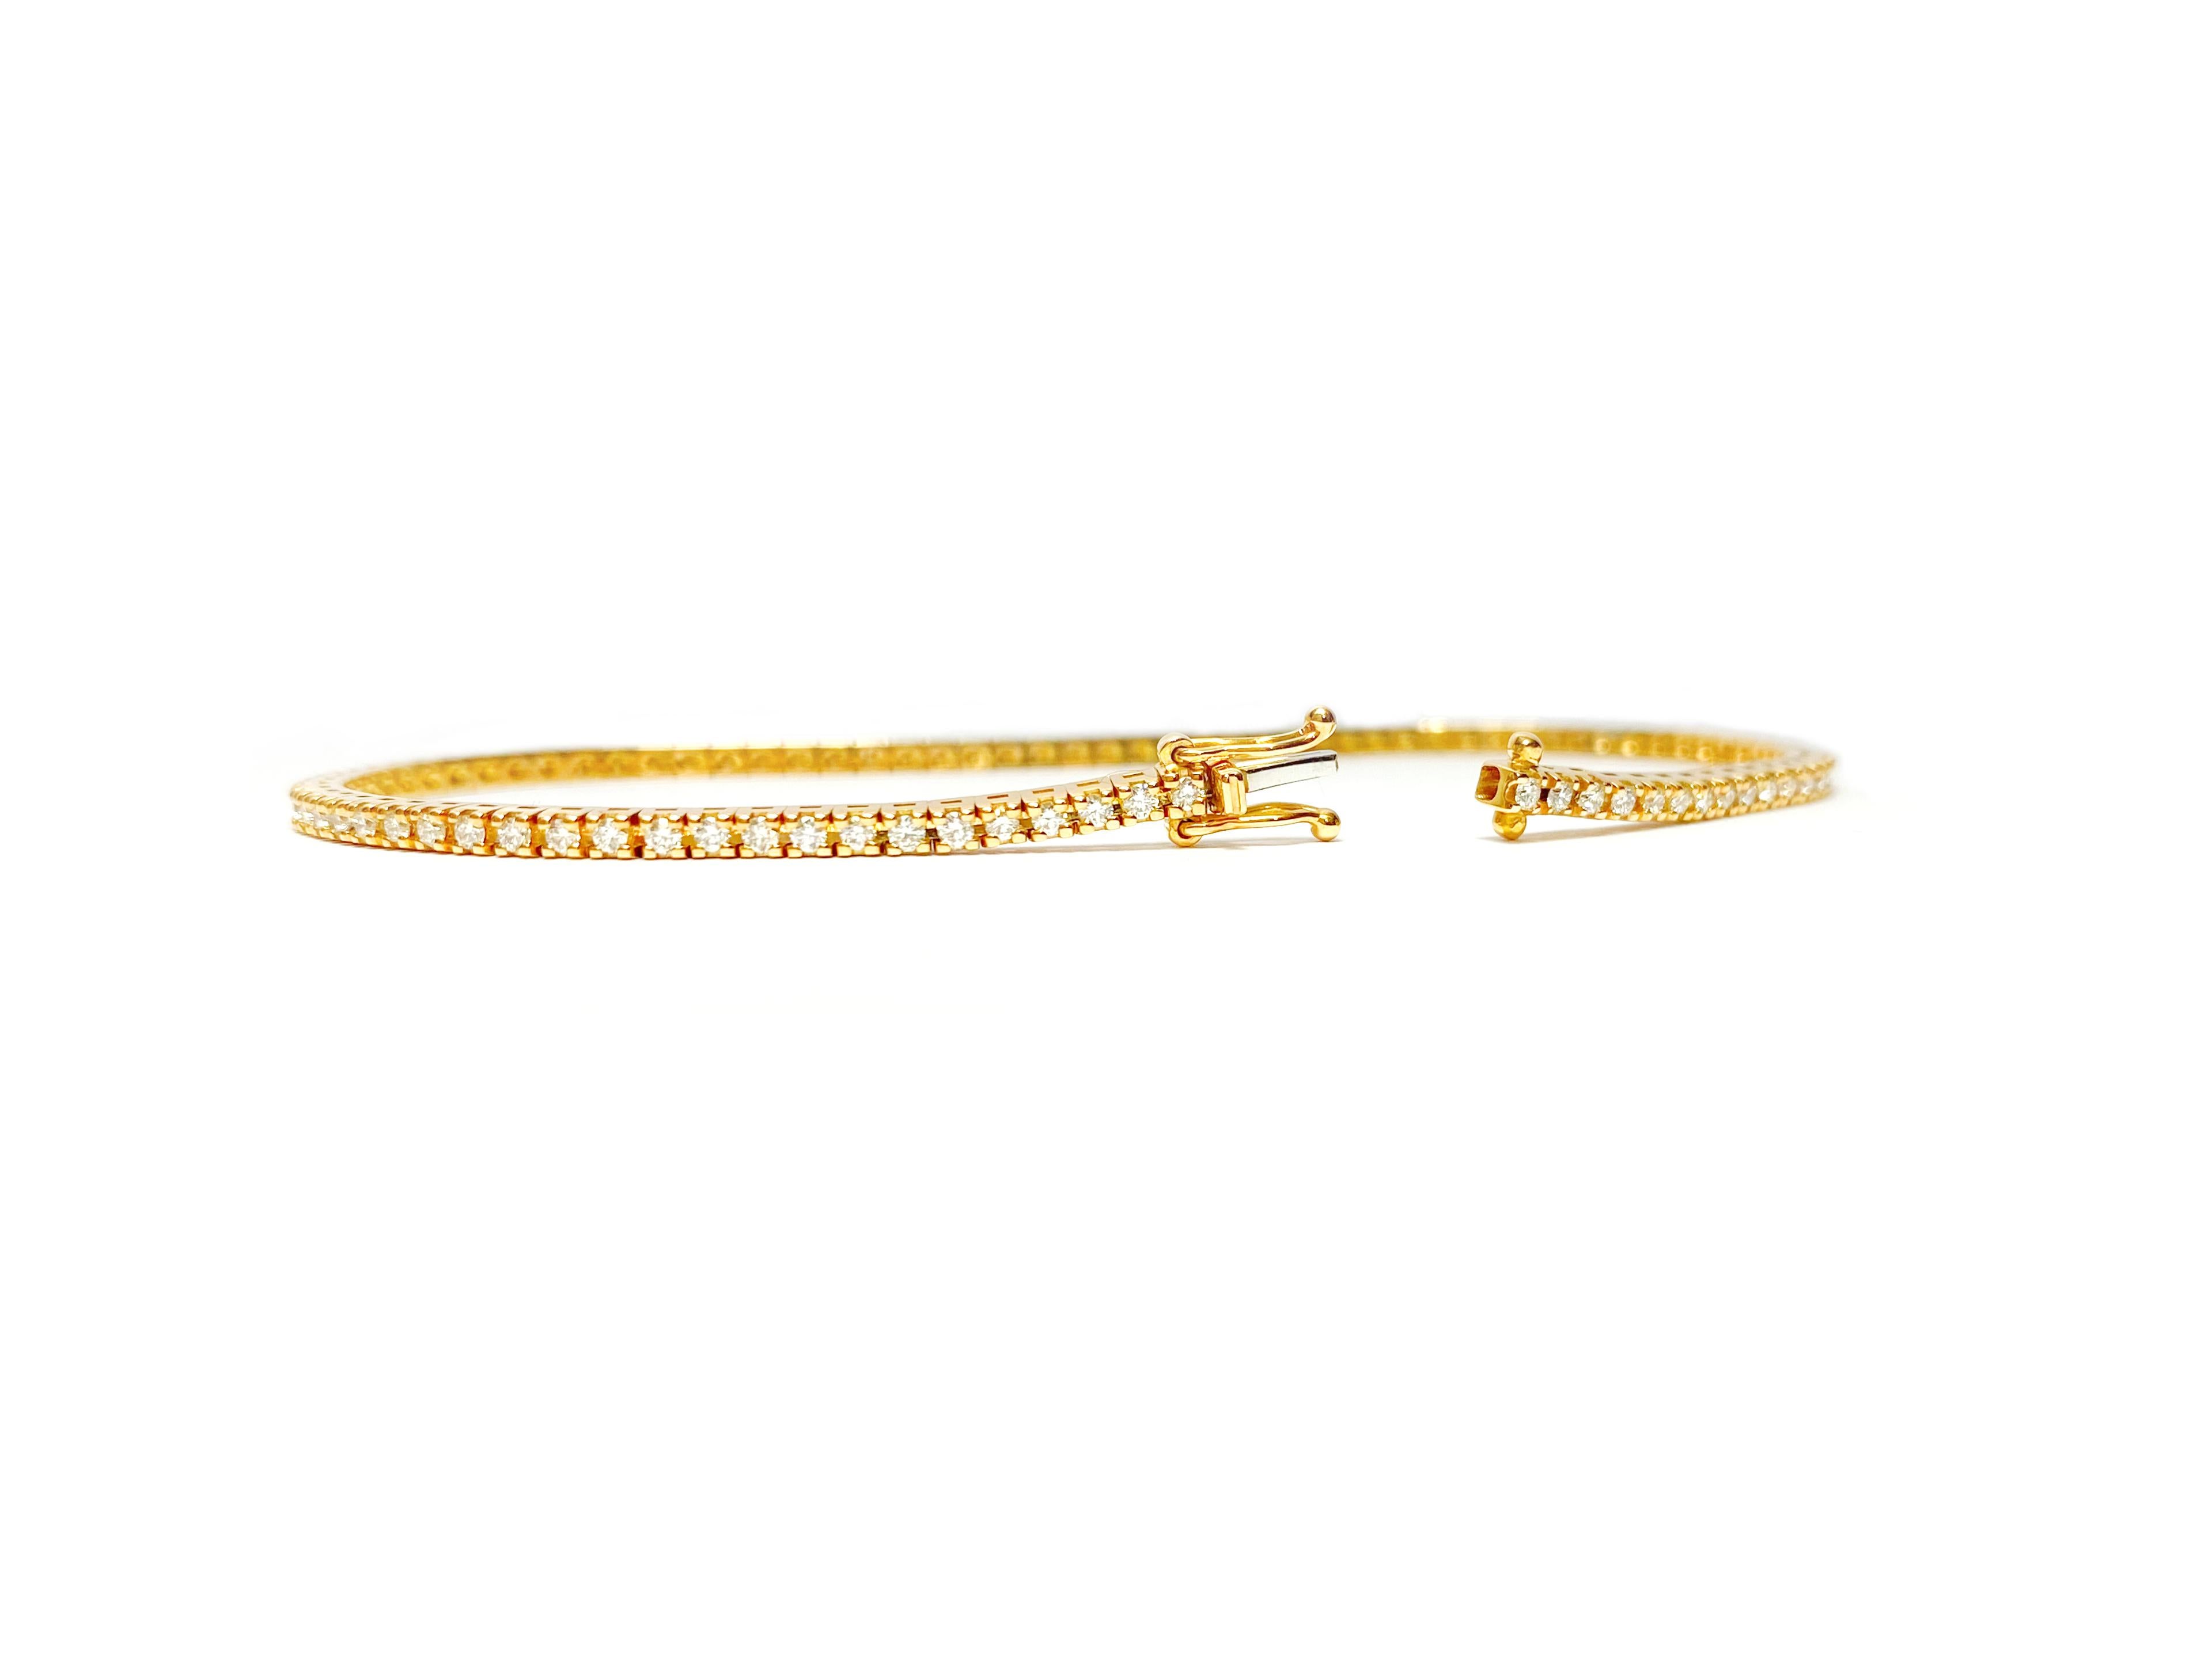 Elegant 18K Red Gold Tennis Bracelet with Brilliant Cut Diamonds totaling 1.00 carat